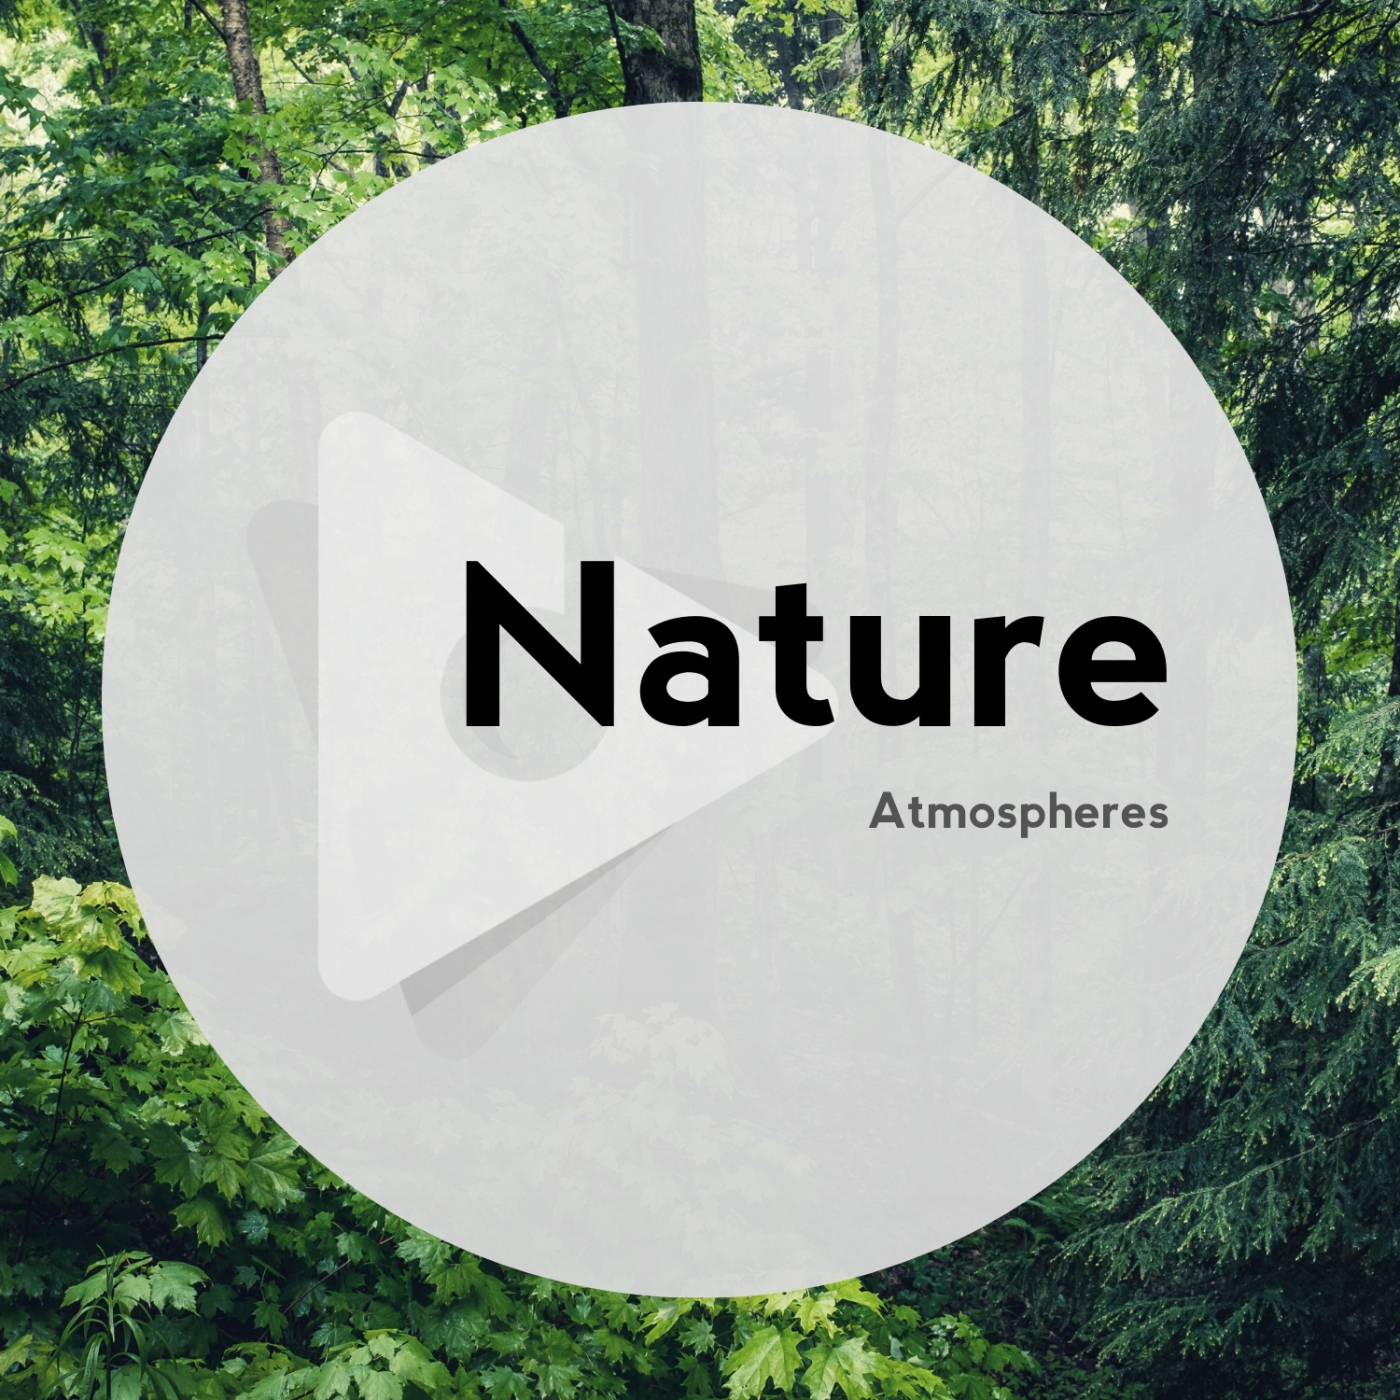 Nature Atmospheres